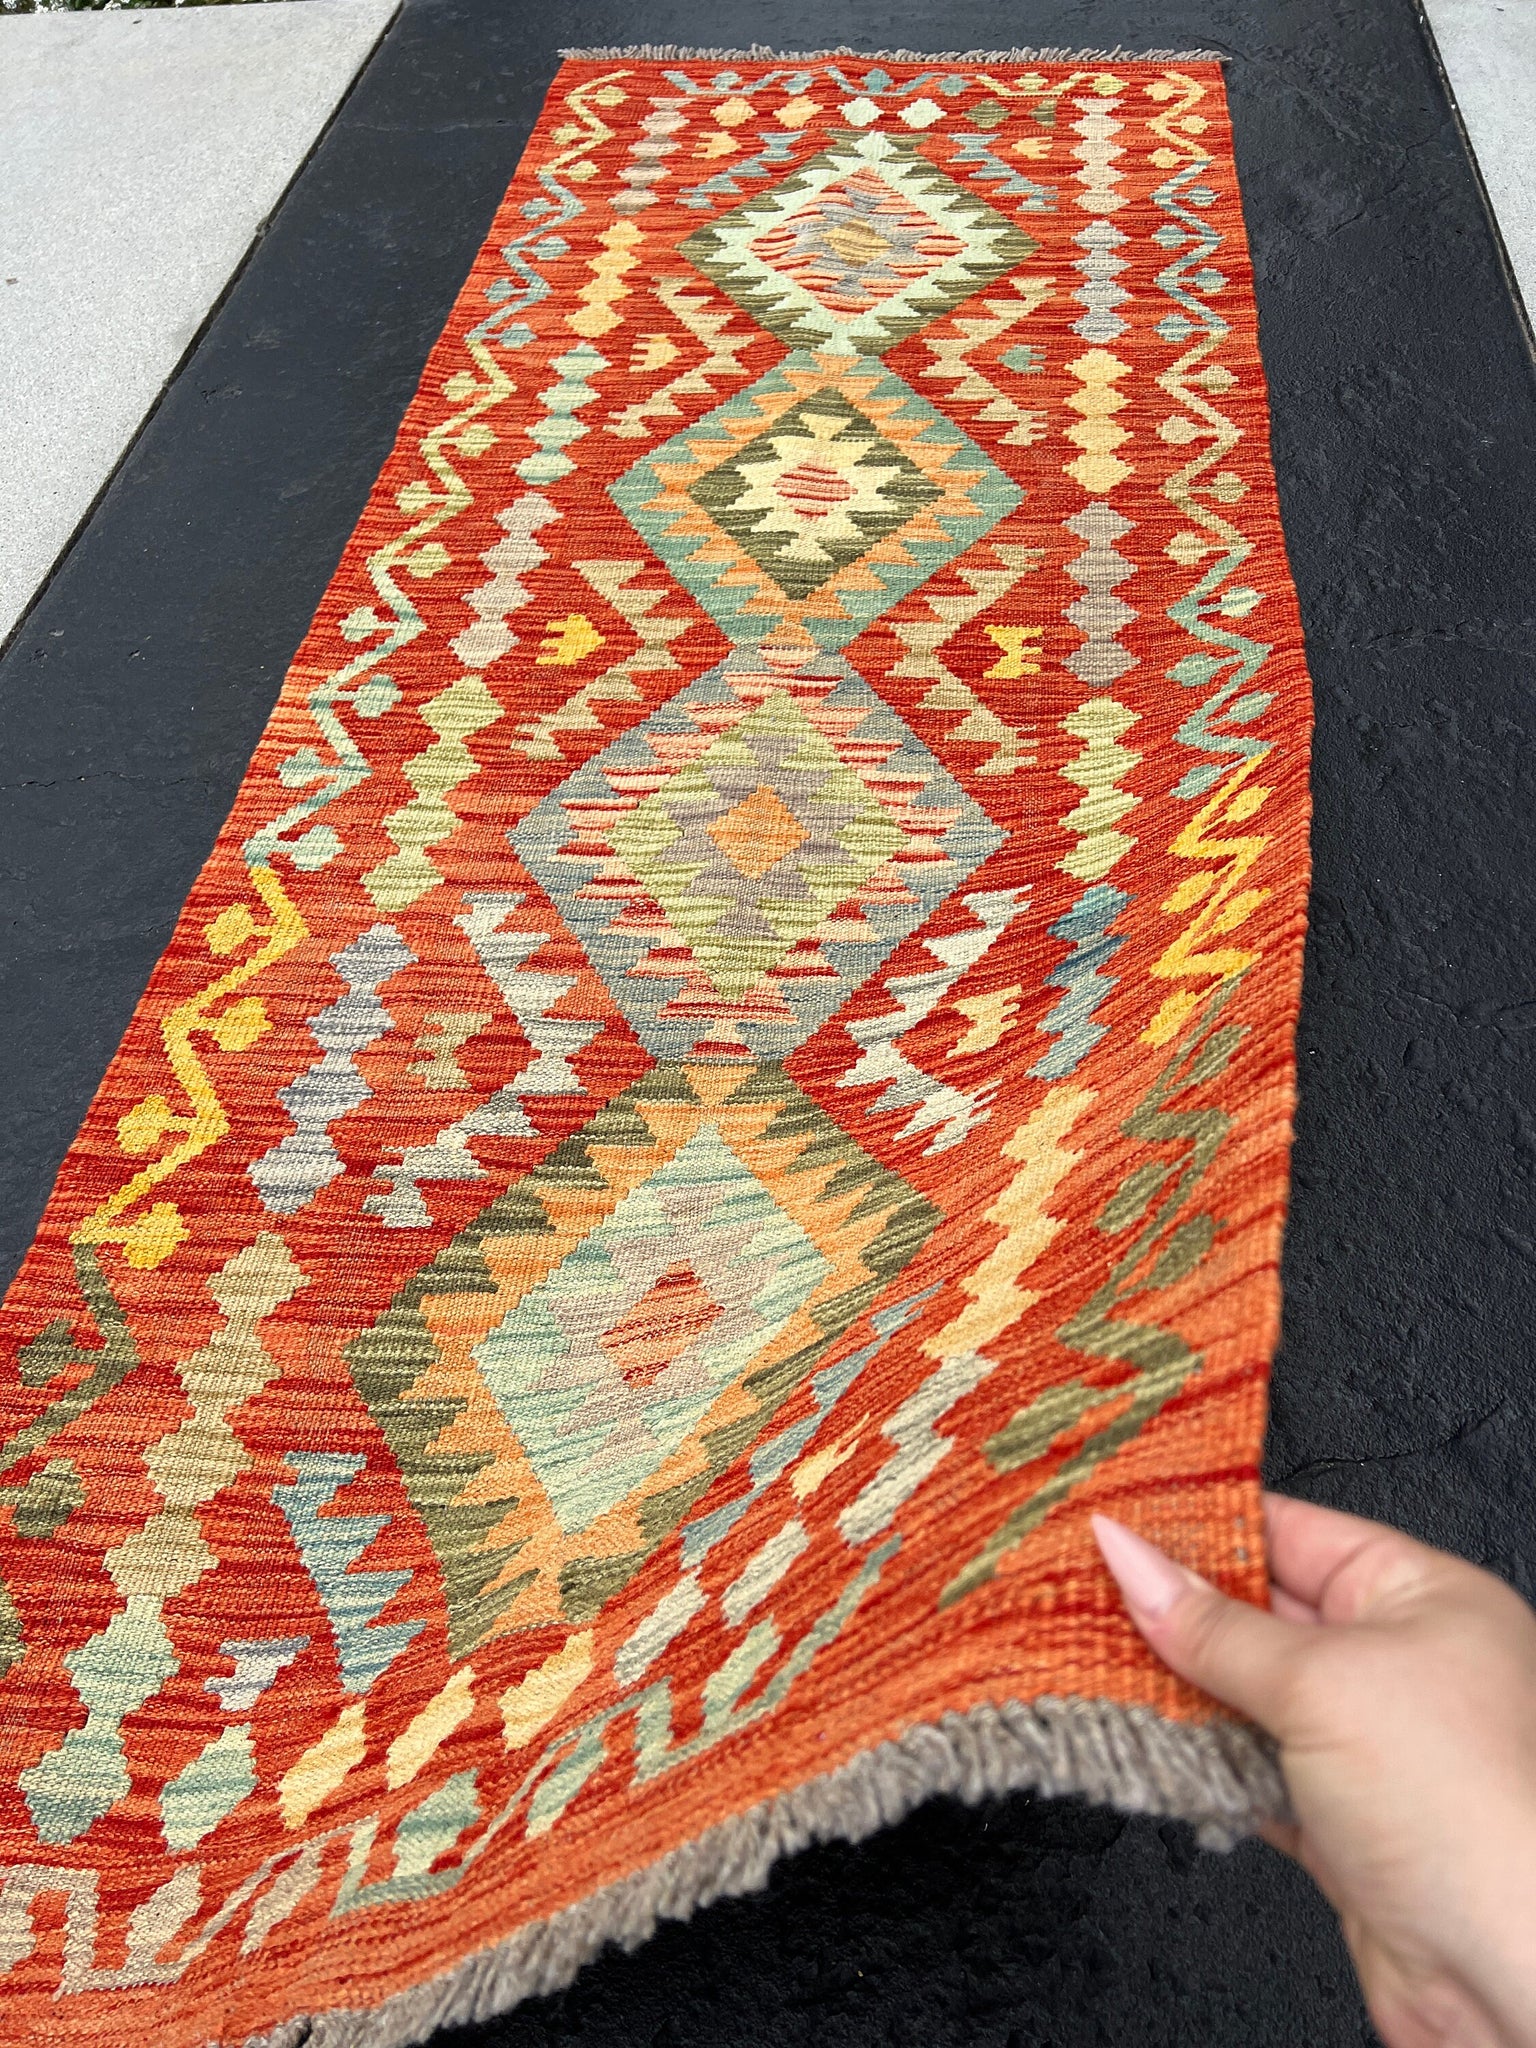 3x7 (100x200) Handmade Afghan Kilim Runner Rug | Burnt Orange Moss Green Denim Blue Red Gold Yellow Grey | Flatweave Oushak Wool